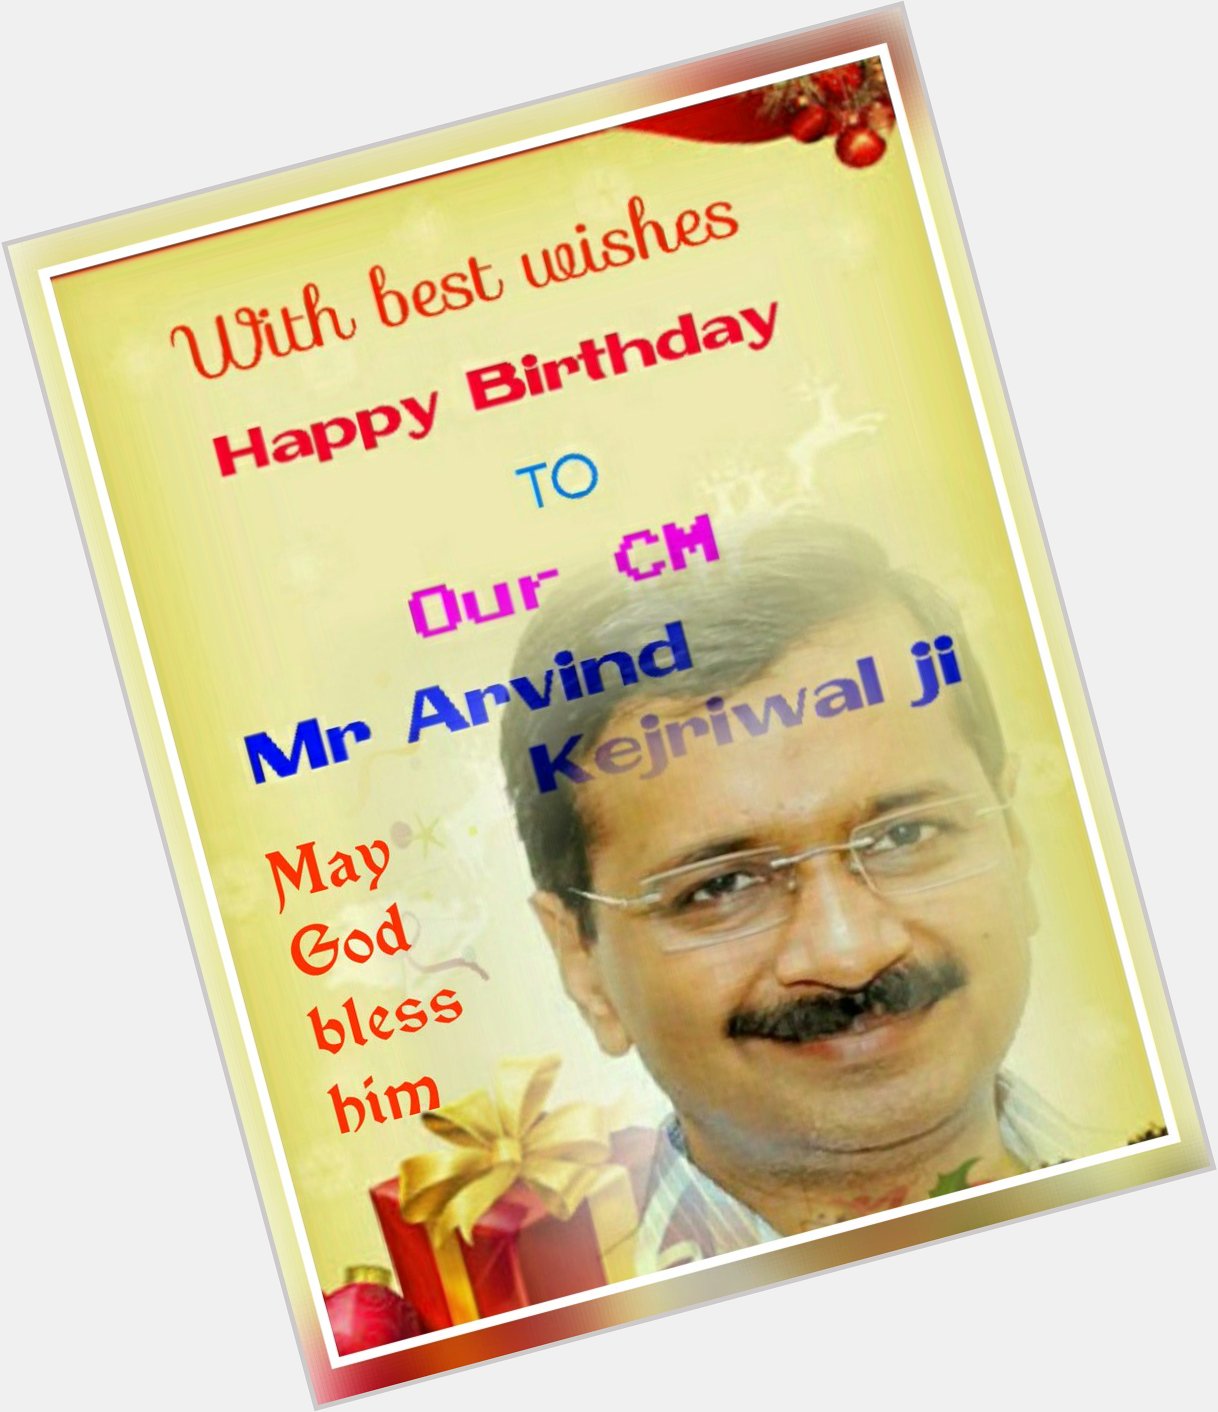 Happy Birthday to Mr. Arvind Kejriwal ji (CM of Delhi) 